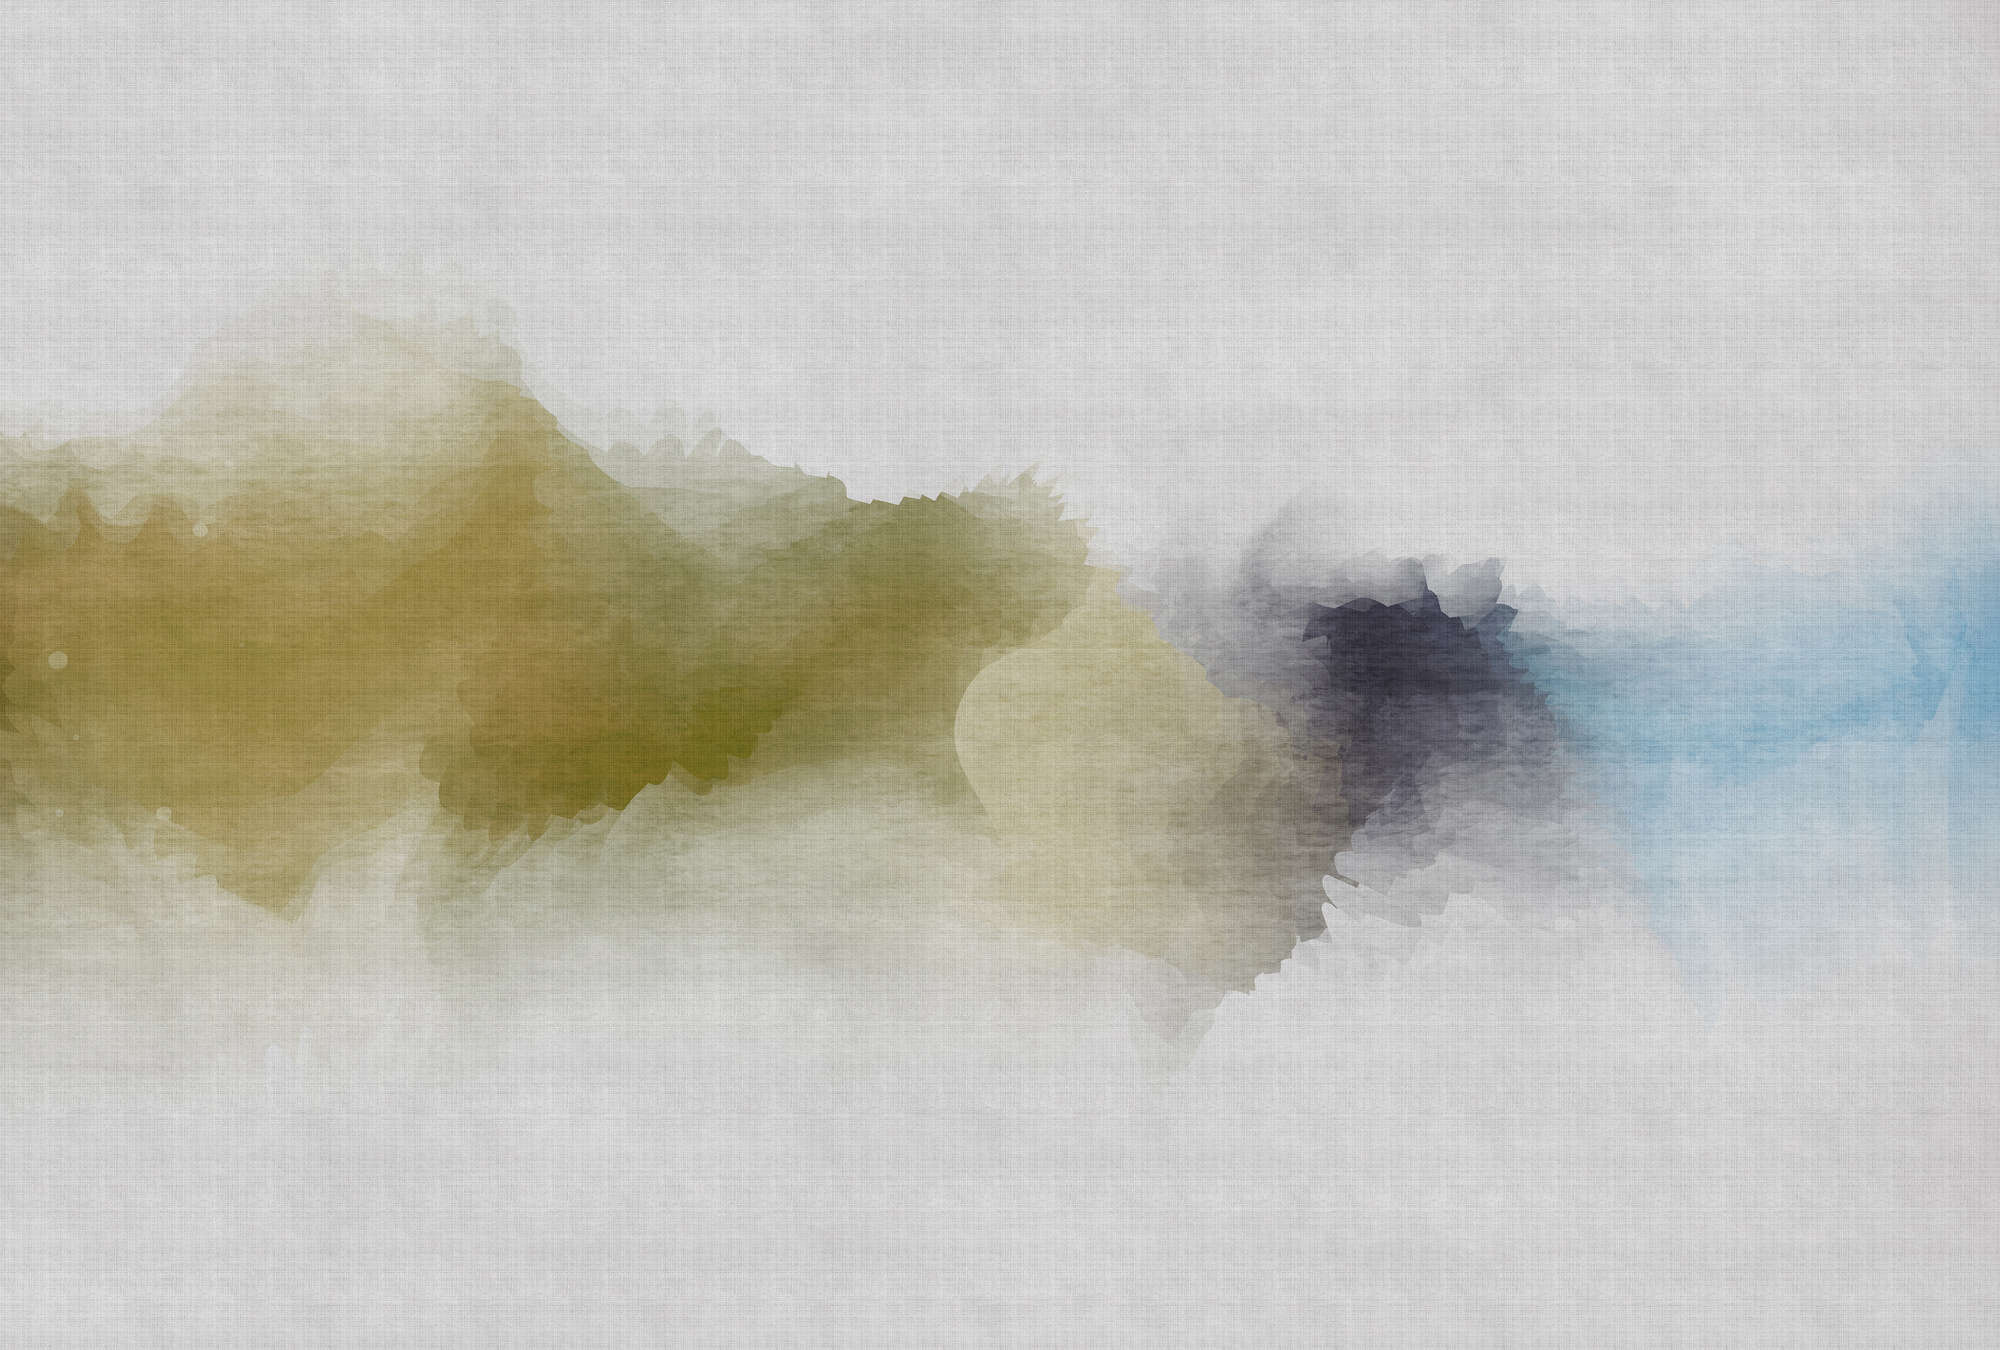             Daydream 3 - Fototapete wolkiges Aquarell-Muster- Naturleinen Struktur – Blau, Gelb | Mattes Glattvlies
        